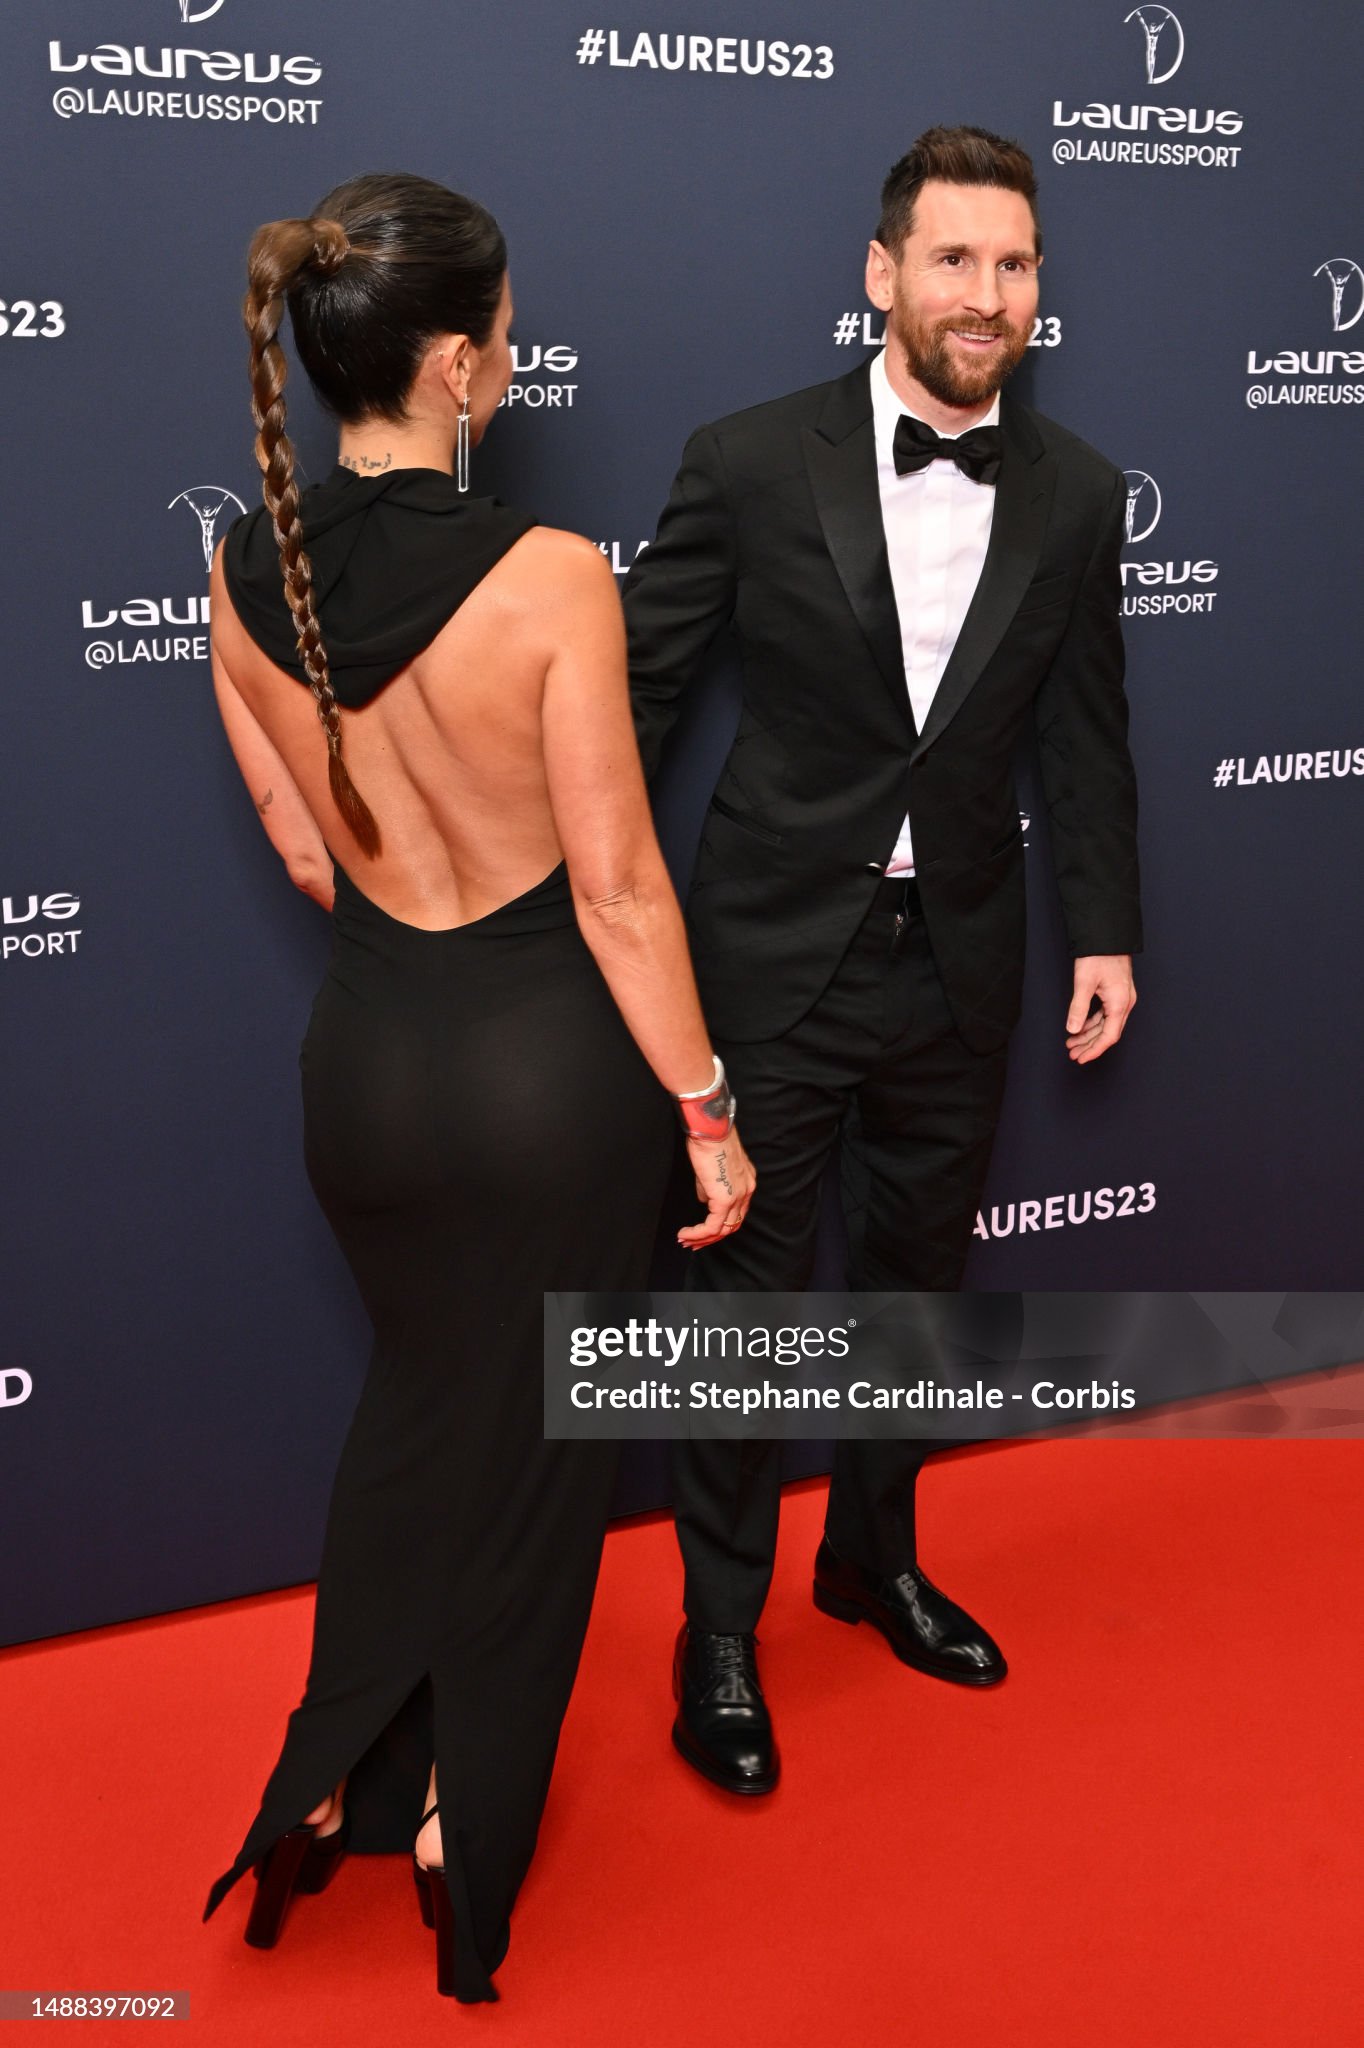 laureus-world-sportsman-of-the-year-2023-nominee-lionel-messi-and-wife-antonella-roccuzzo.jpg